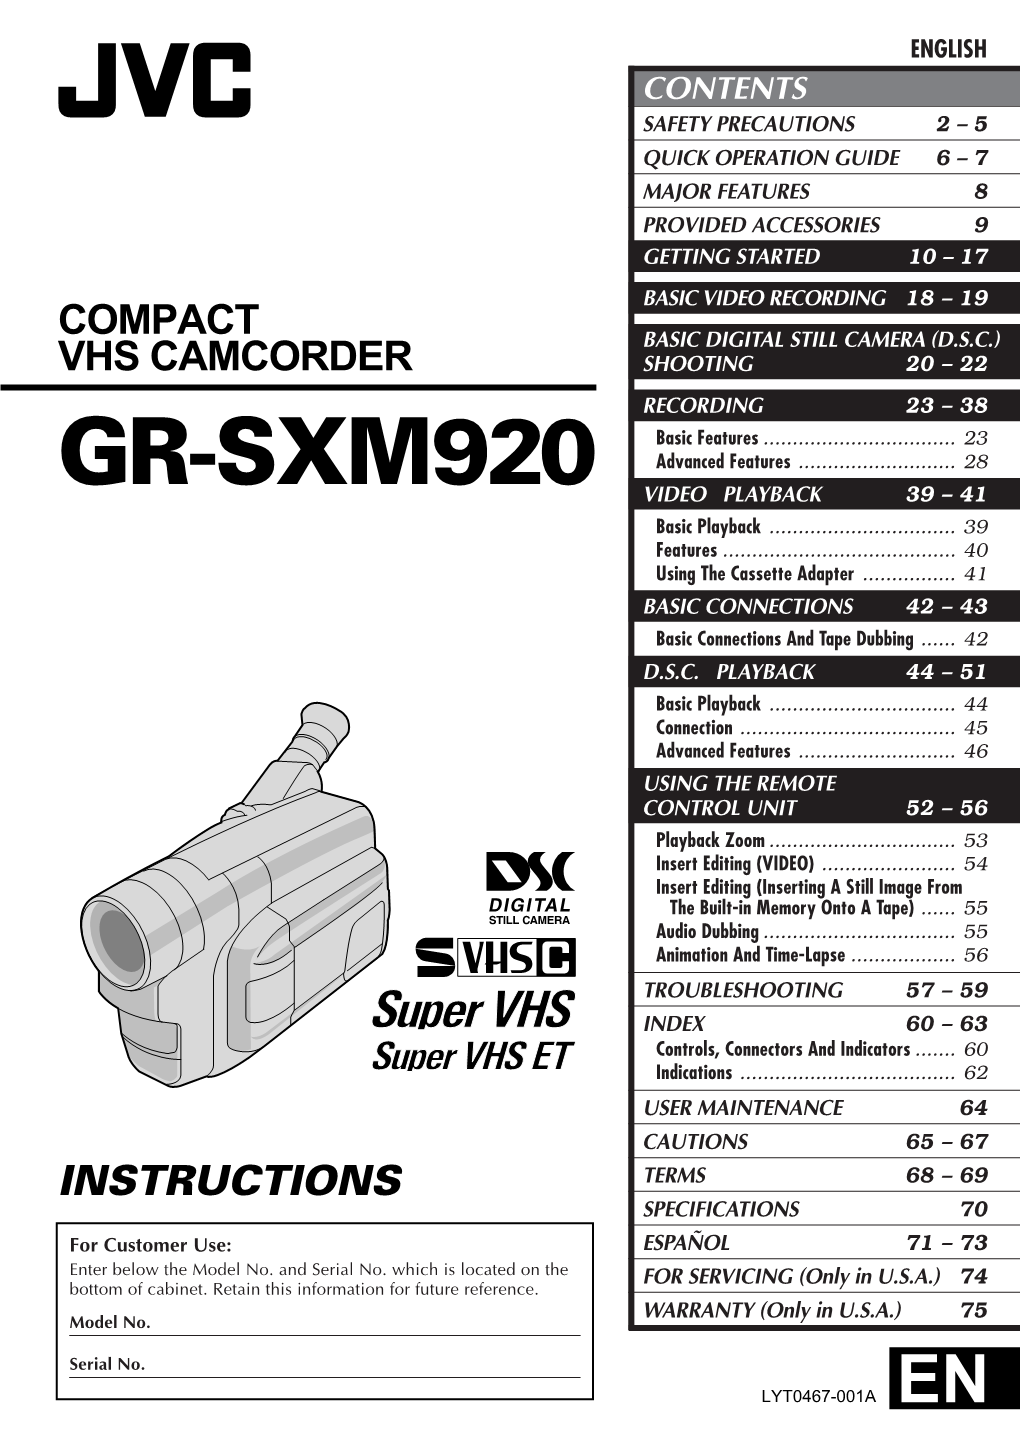 GR-SXM920 Advanced Features